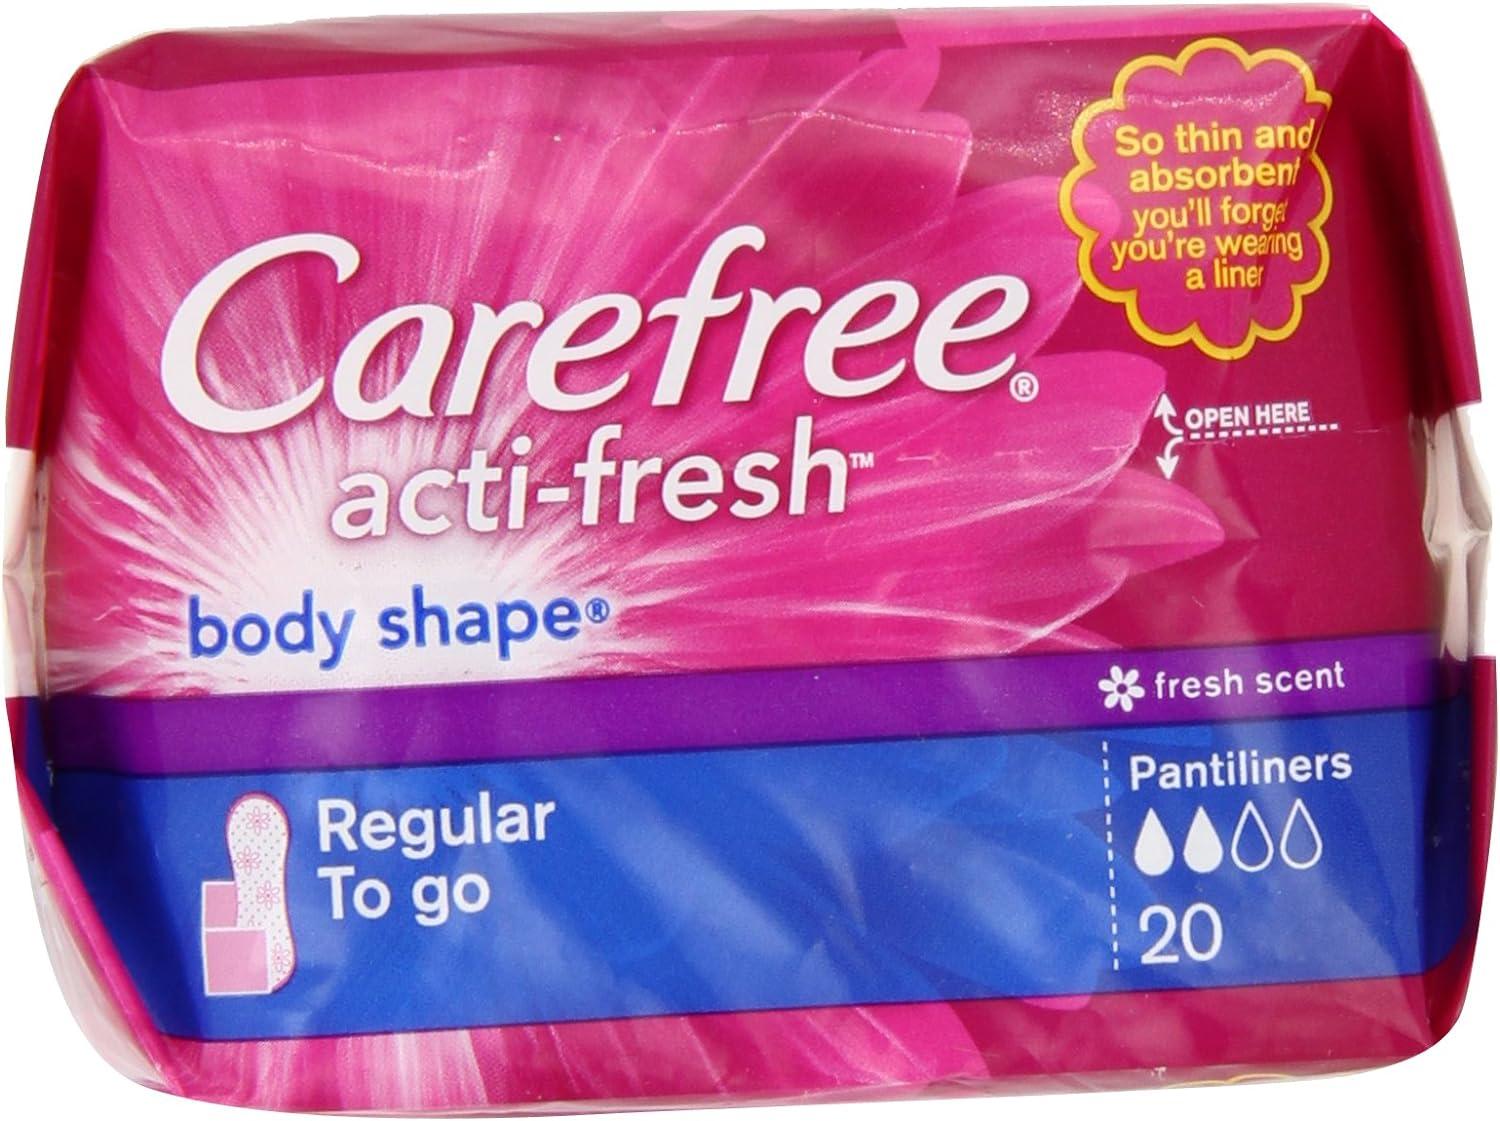 Carefree Acti-fresh Body shape fresh scent regular size 20 count